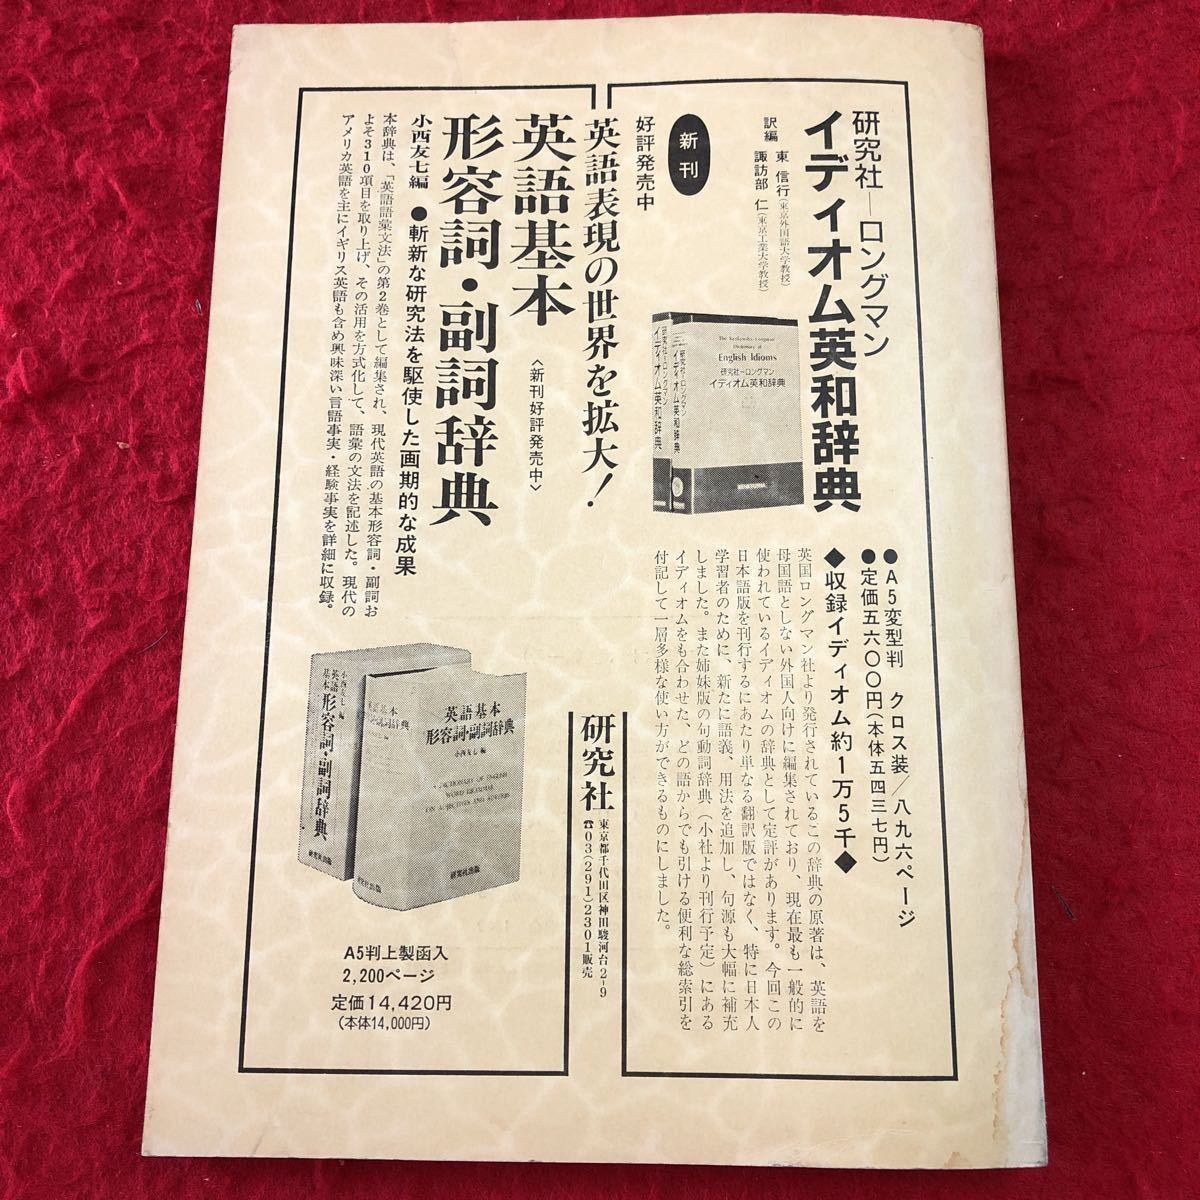 S6f-226 英文学研究 第66巻 第1号 1989年9月30日 発行 日本英文学会 論文 英語 文学 語学 和文 書評 考察 研究 チョーサー T.S.エリオット_背表紙に汚れあり